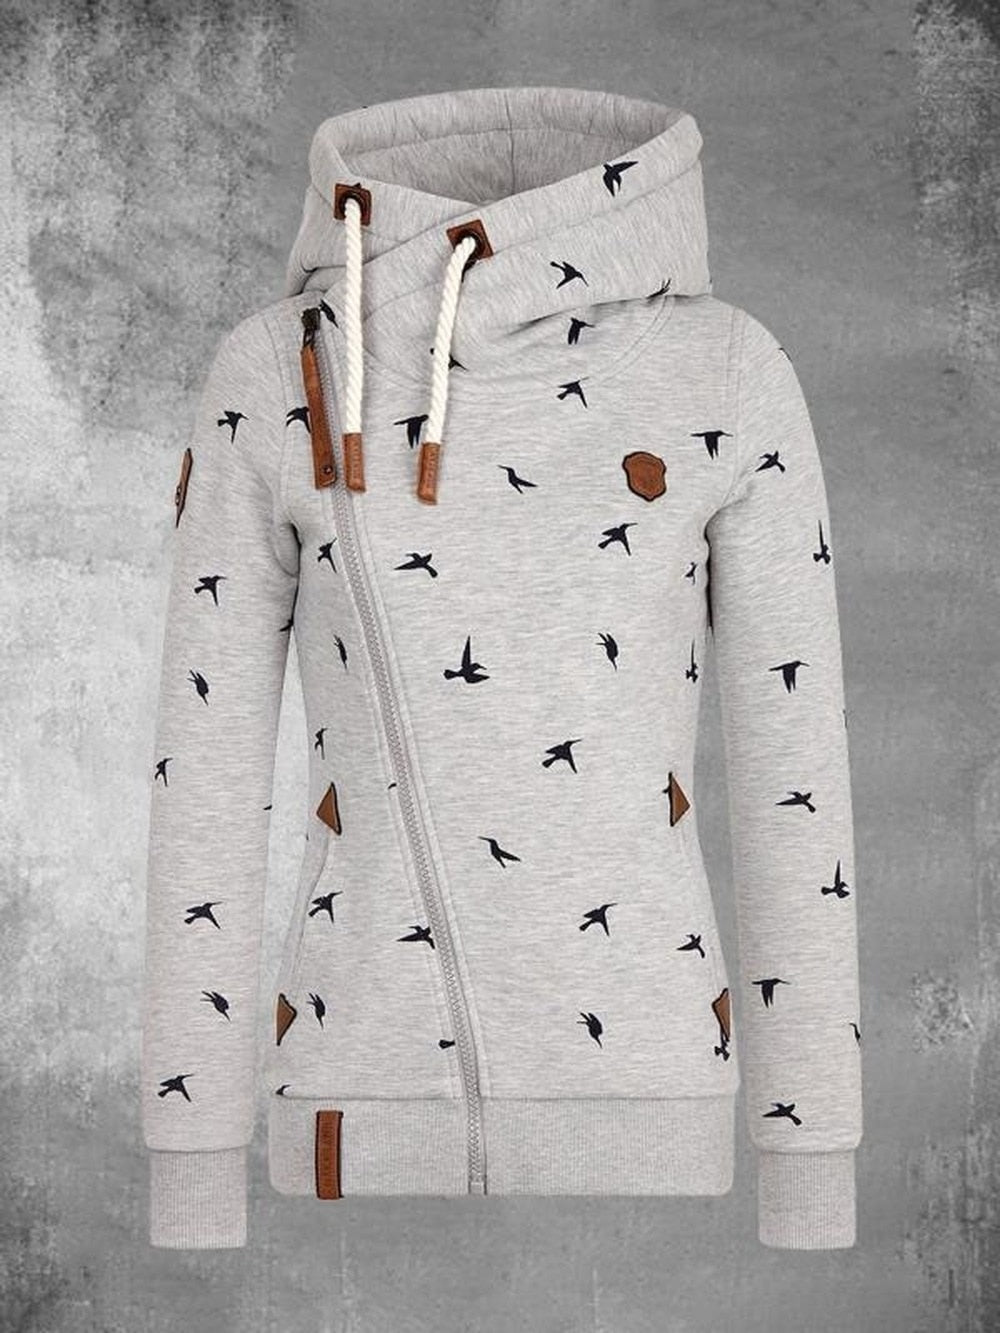 Bird Hooded Pocket Diagonal Zipper Cardigan Jacket Sweatshirt